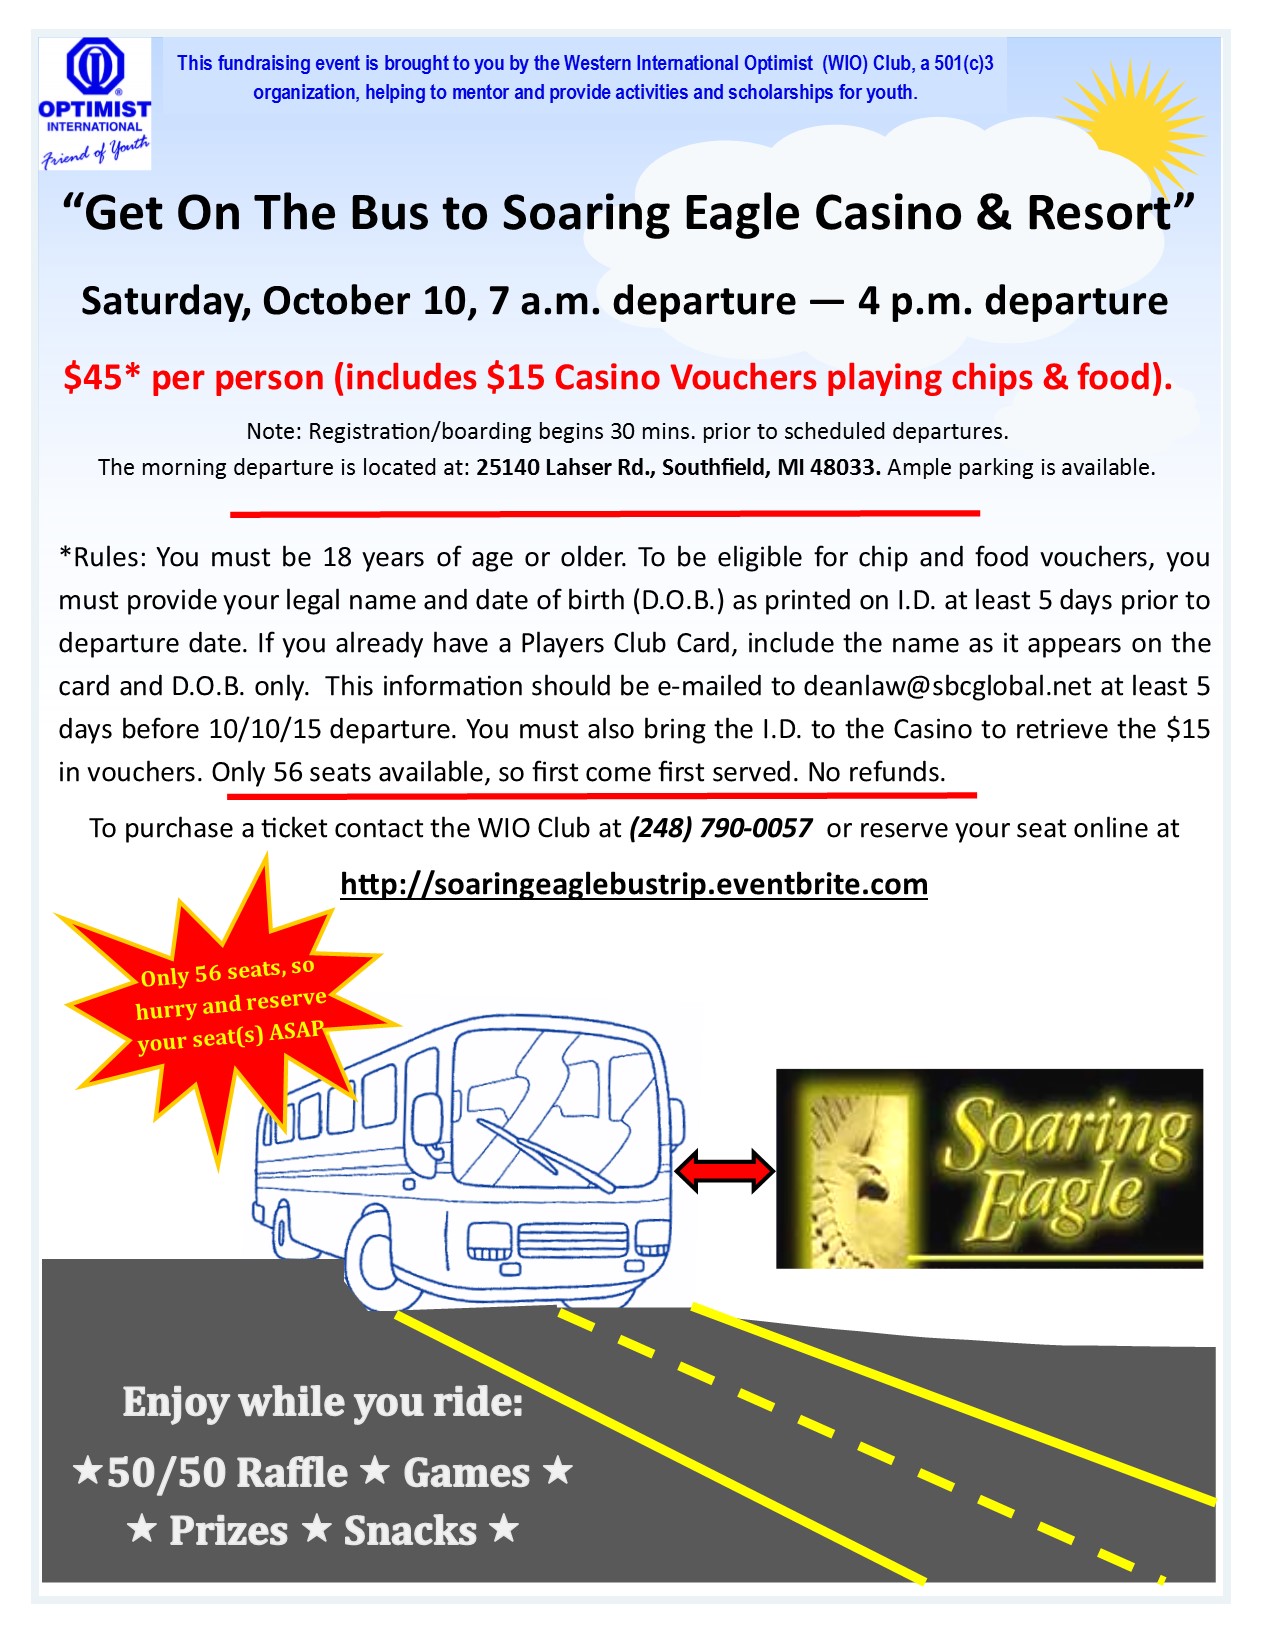 soaring eagle casino and resort michigan